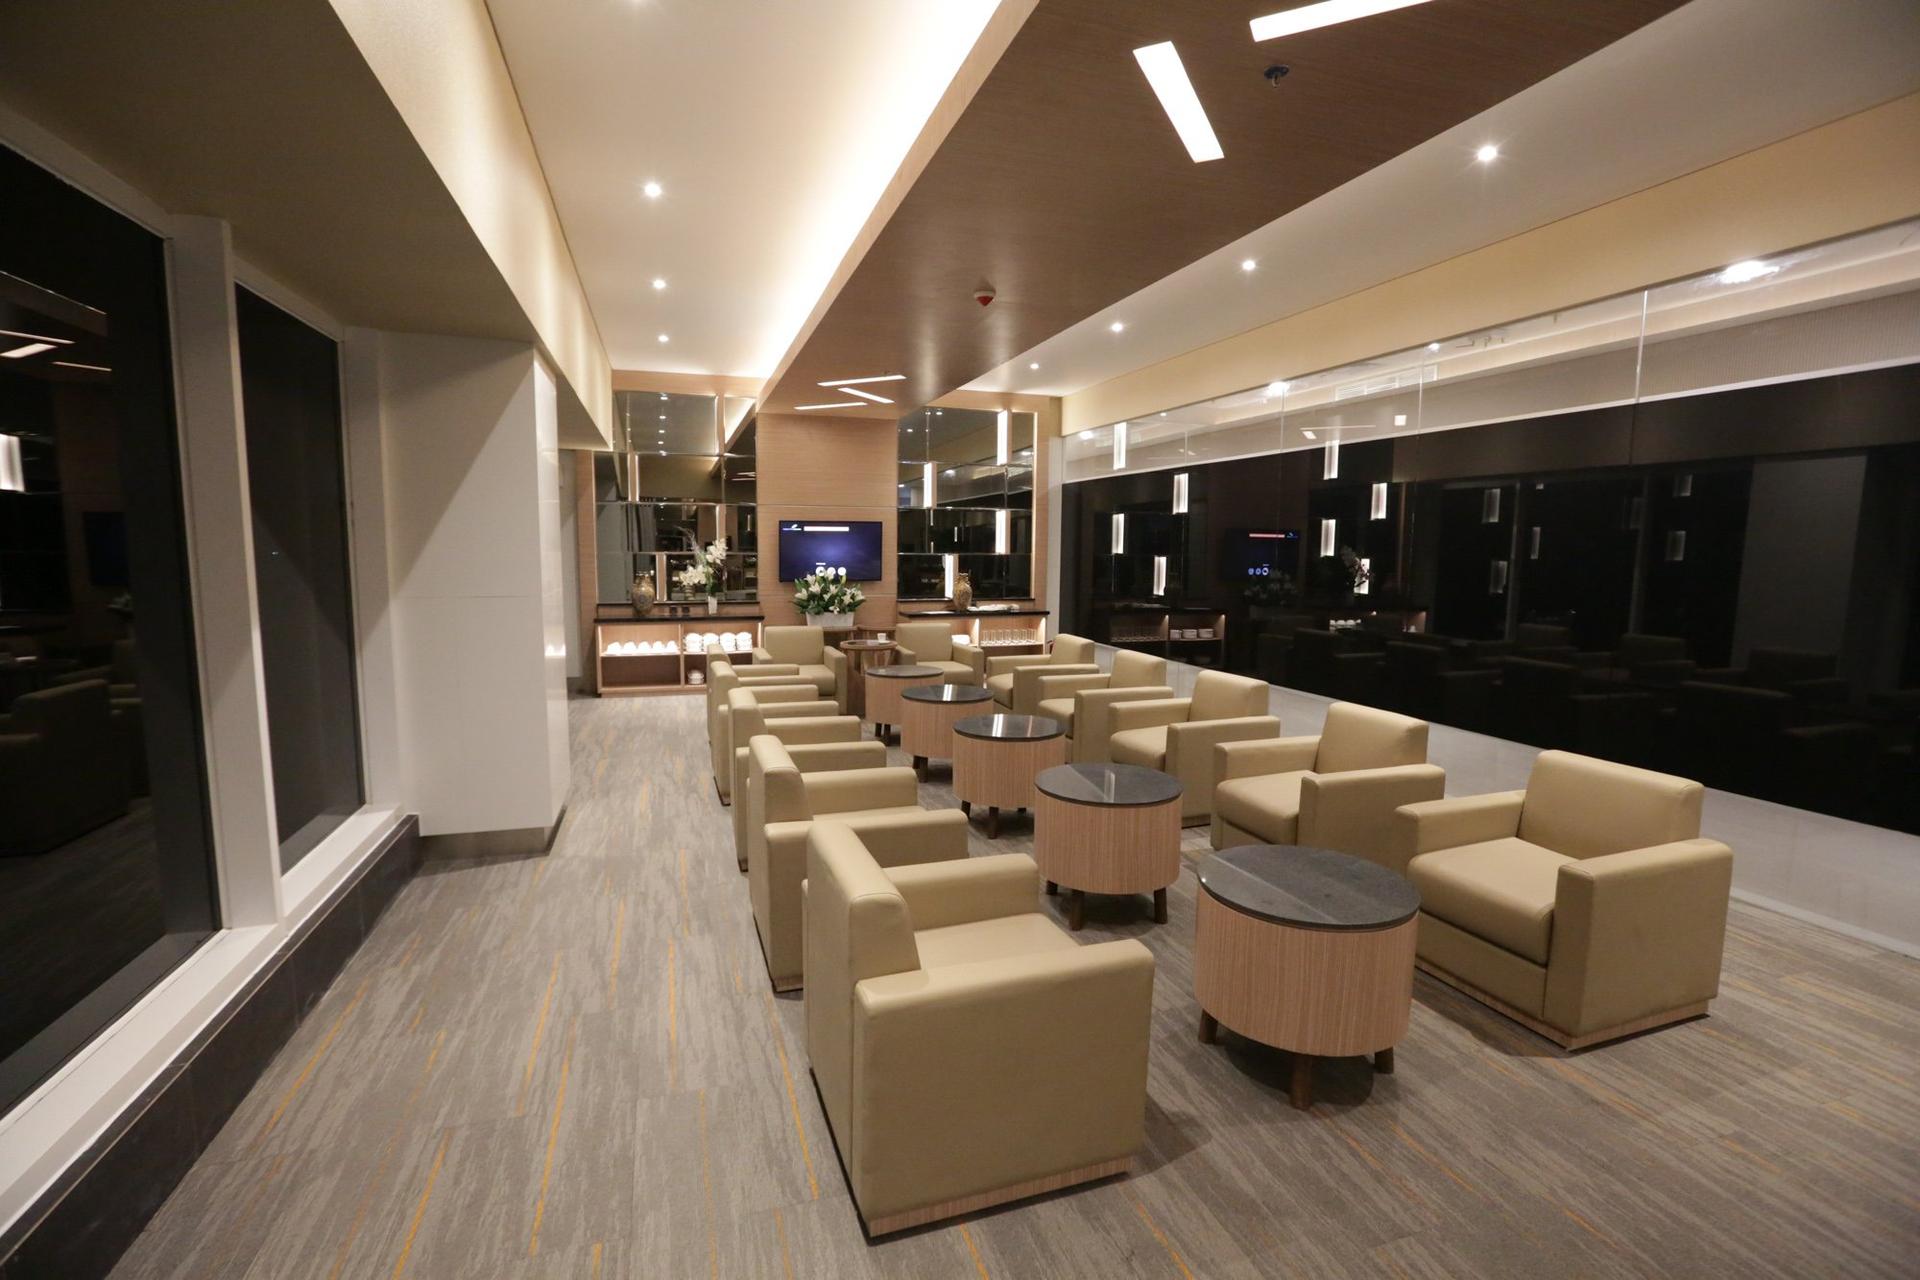 Concordia Lounge image 1 of 3